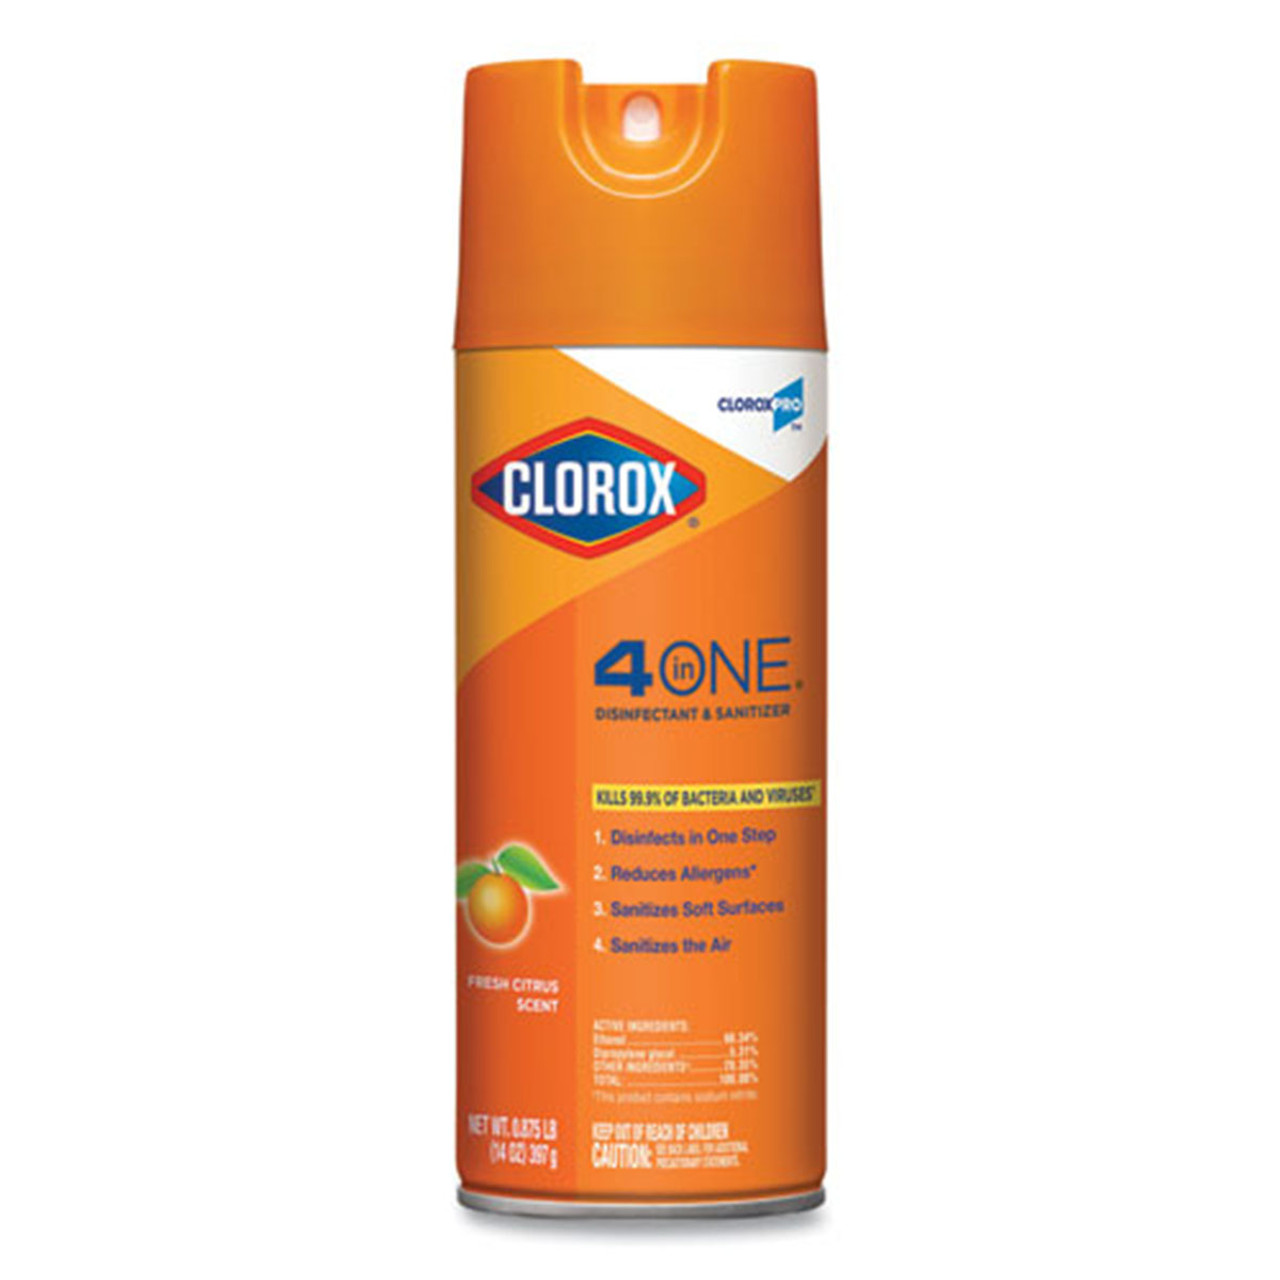 Bleach Germicidal Cleaner, 22 oz Spray Bottle | Clorox